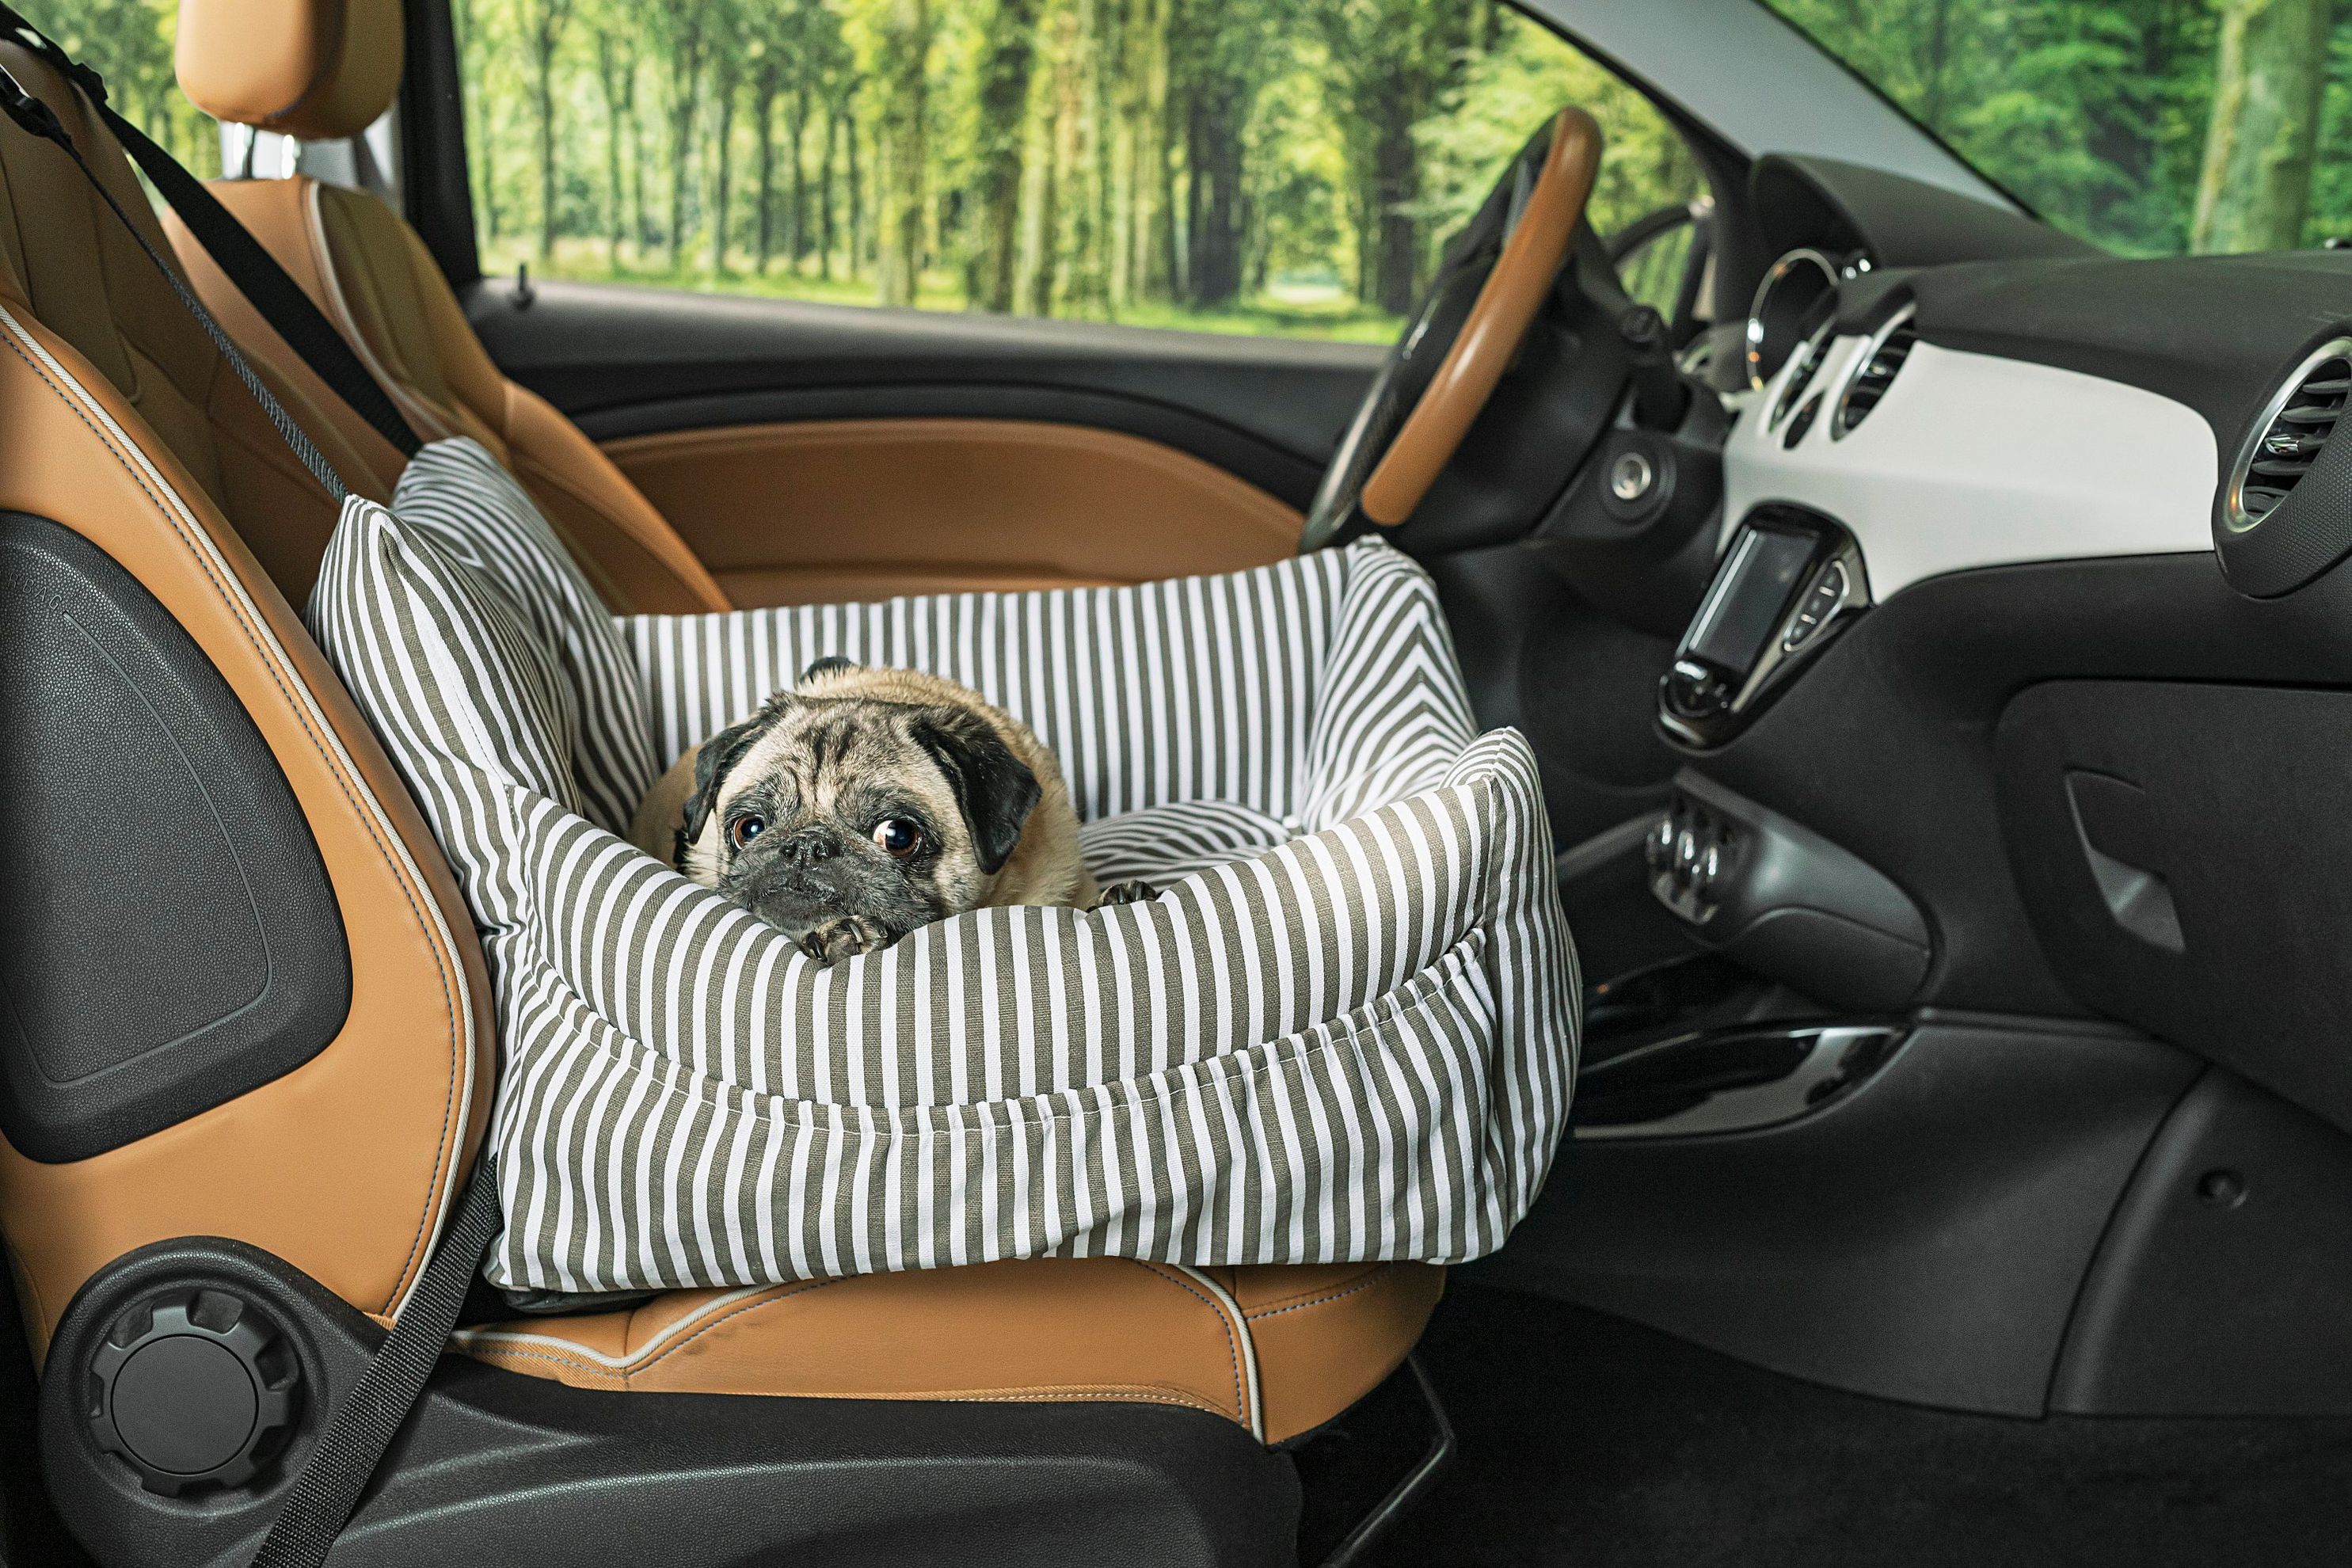 Hunde-Autositz jetzt bei Weltbild.de bestellen